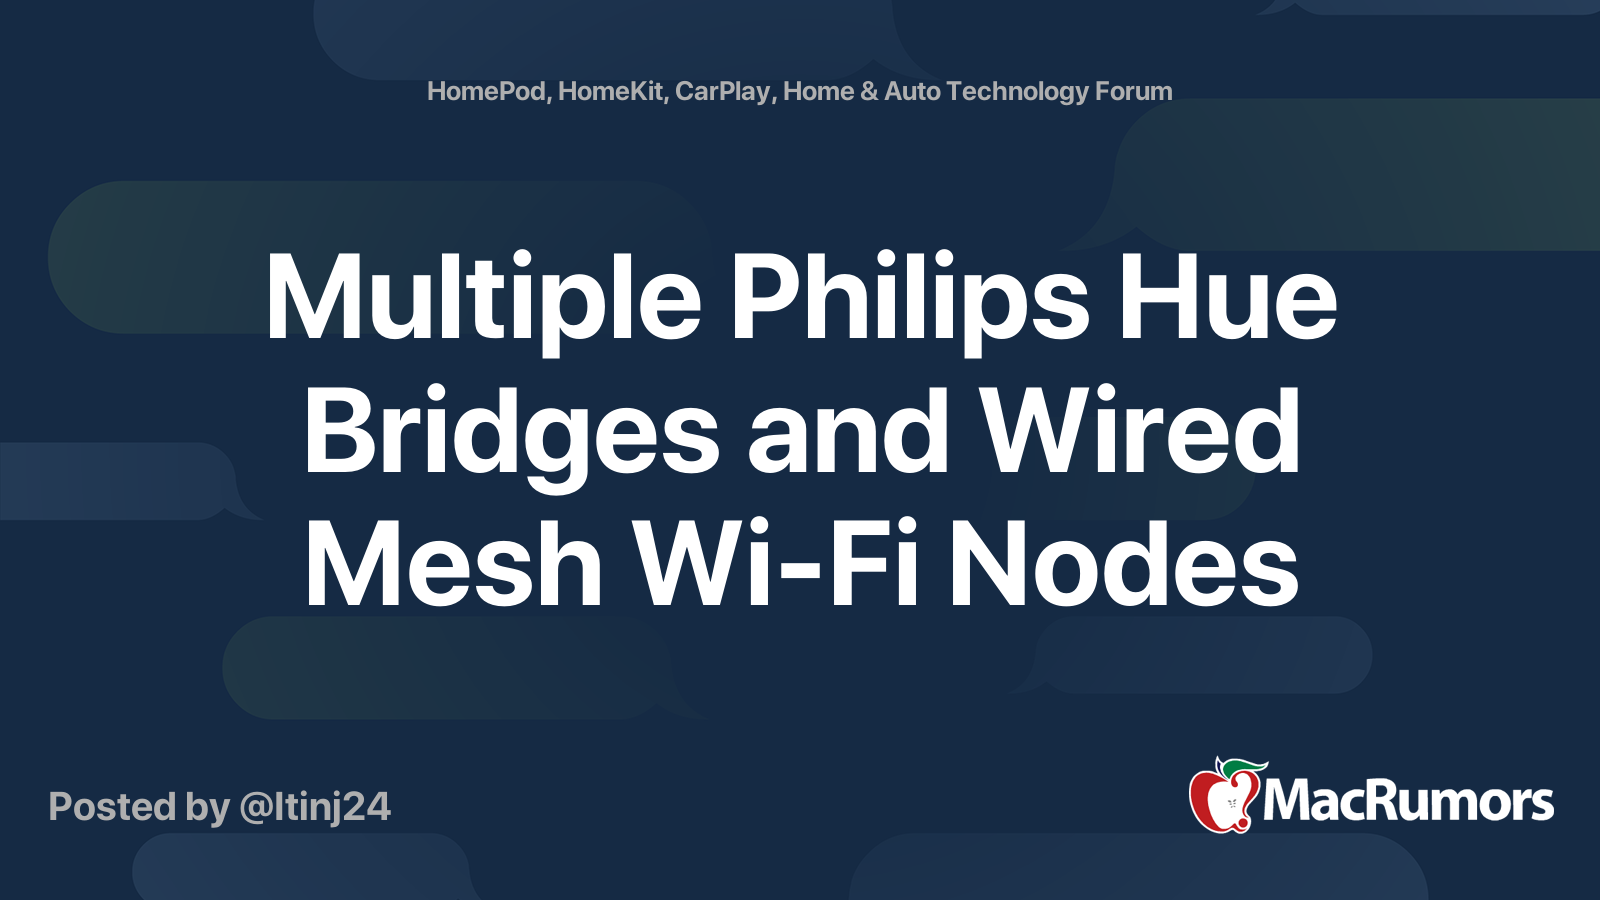 Philips Hue Bridge Matter Support Update Appears to Have Been Delayed -  MacRumors